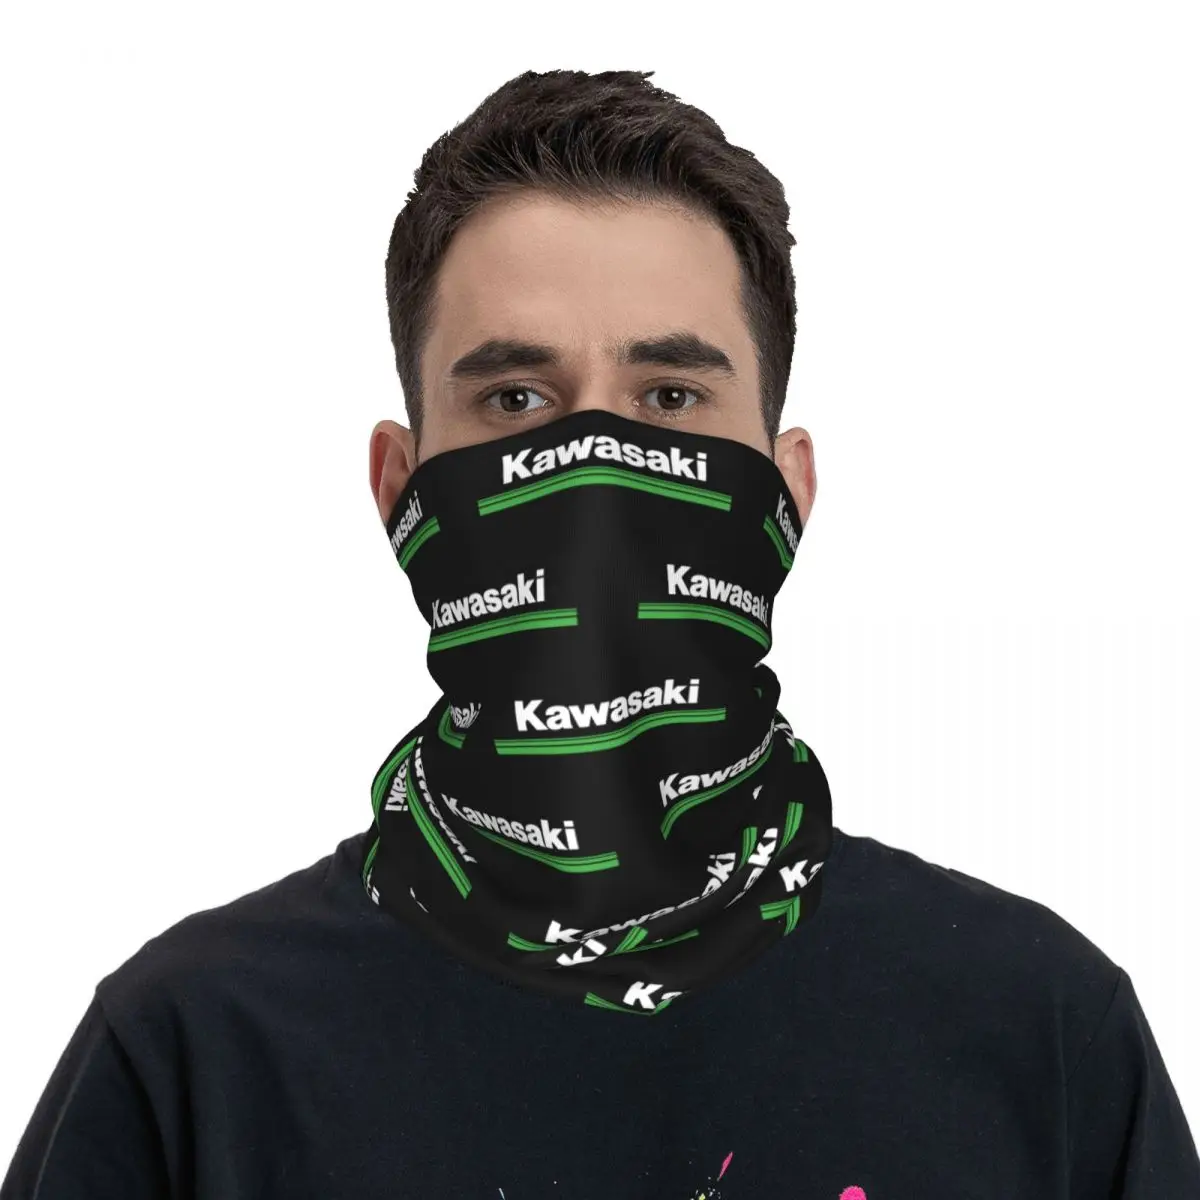 

Adult Motorcycle Kawasakis Motor Racing Bandana Merchandise Neck Cover Printed Mask Scarf Multi-use Headwear For Cycling